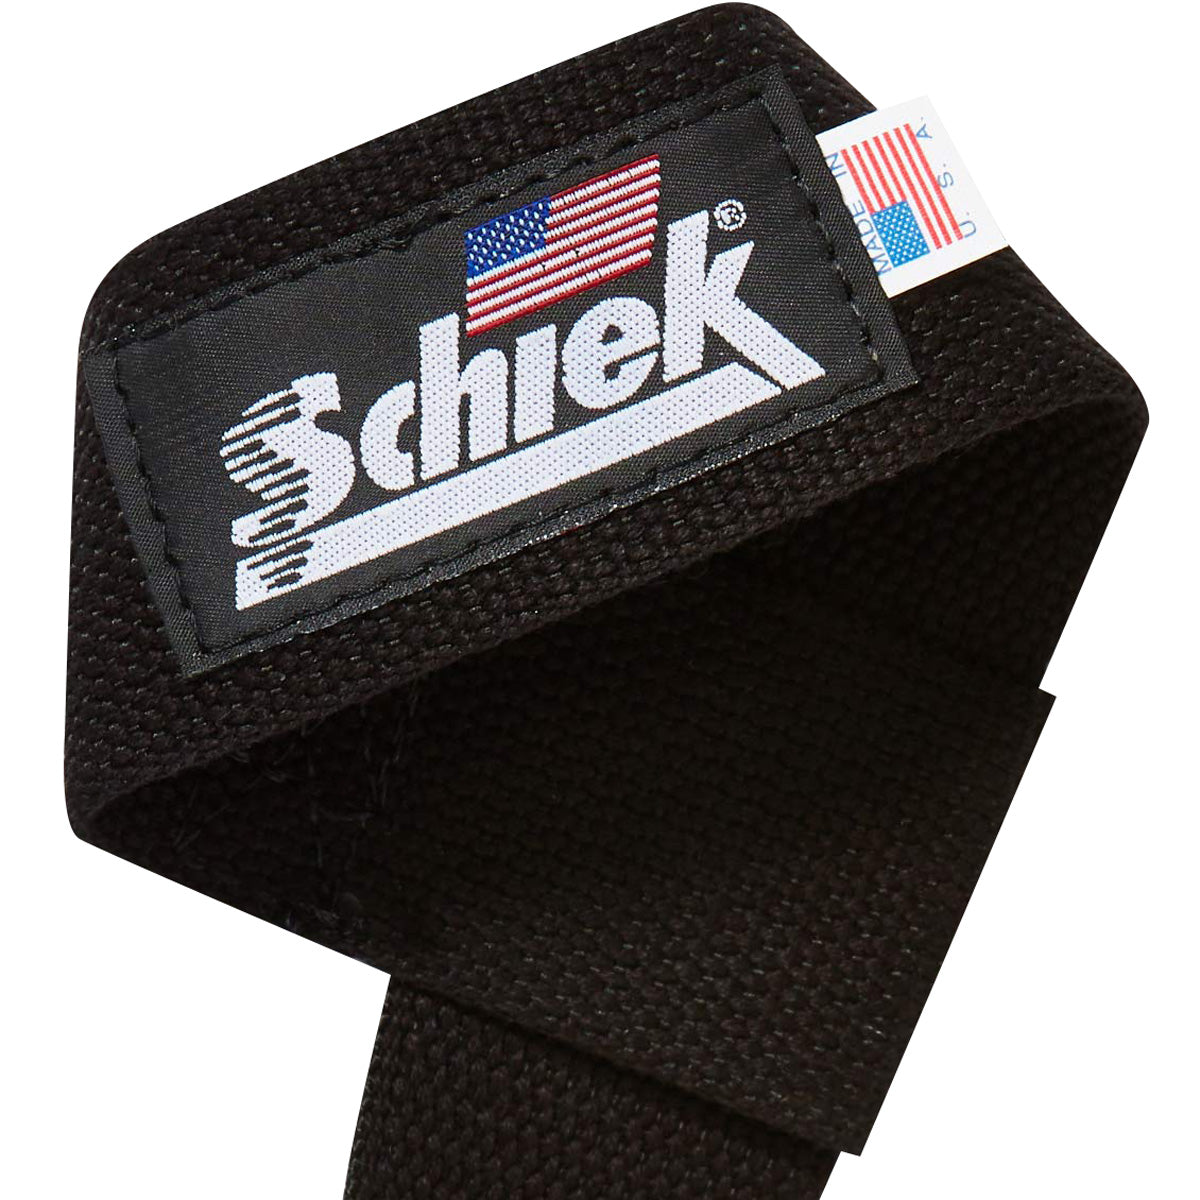 Schiek Sports Model 1000-BLS Basic 20" Lifting Straps - Black Schiek Sports